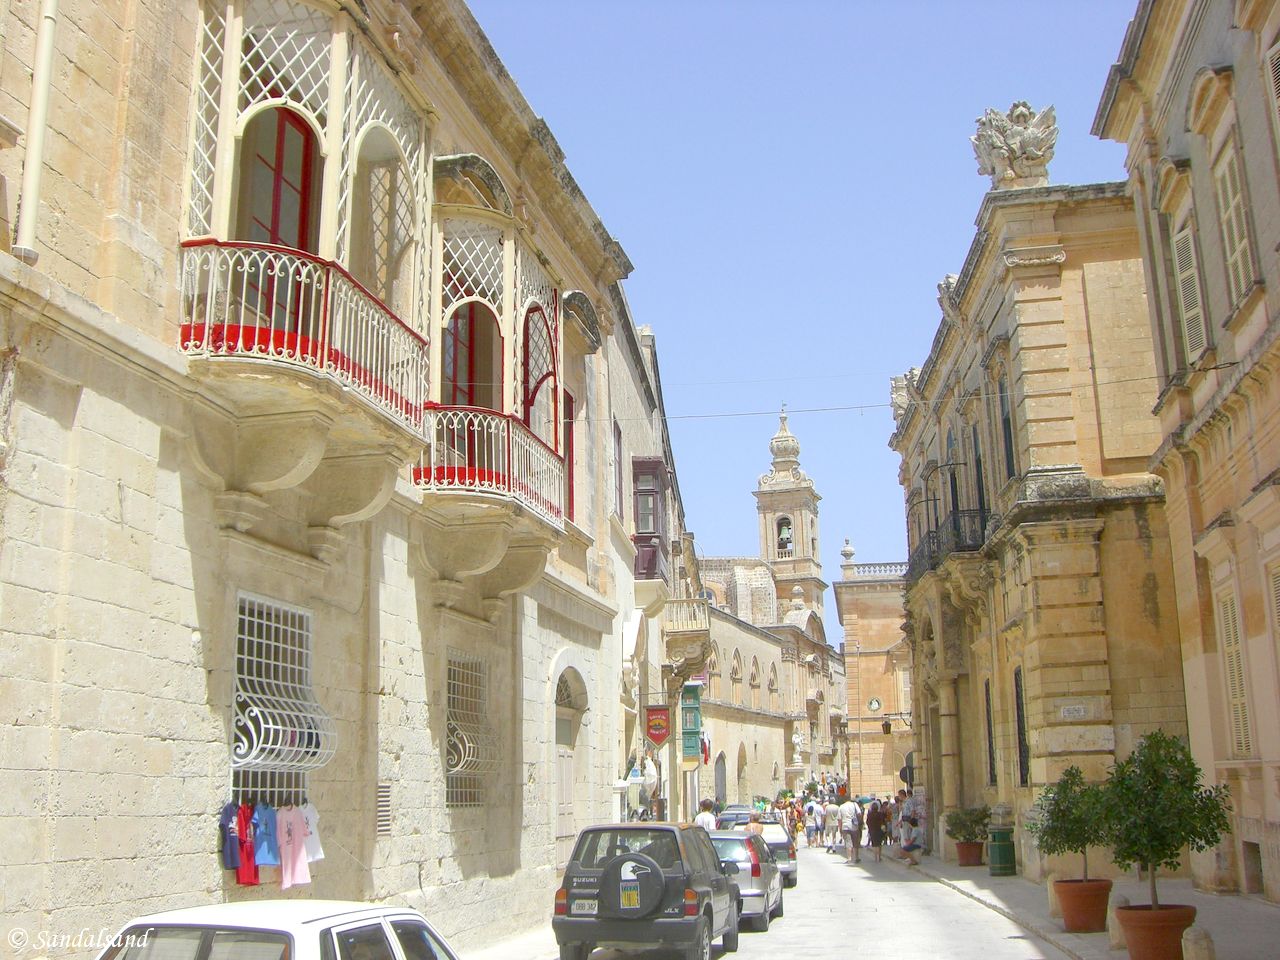 Street view from Mdina, Malta